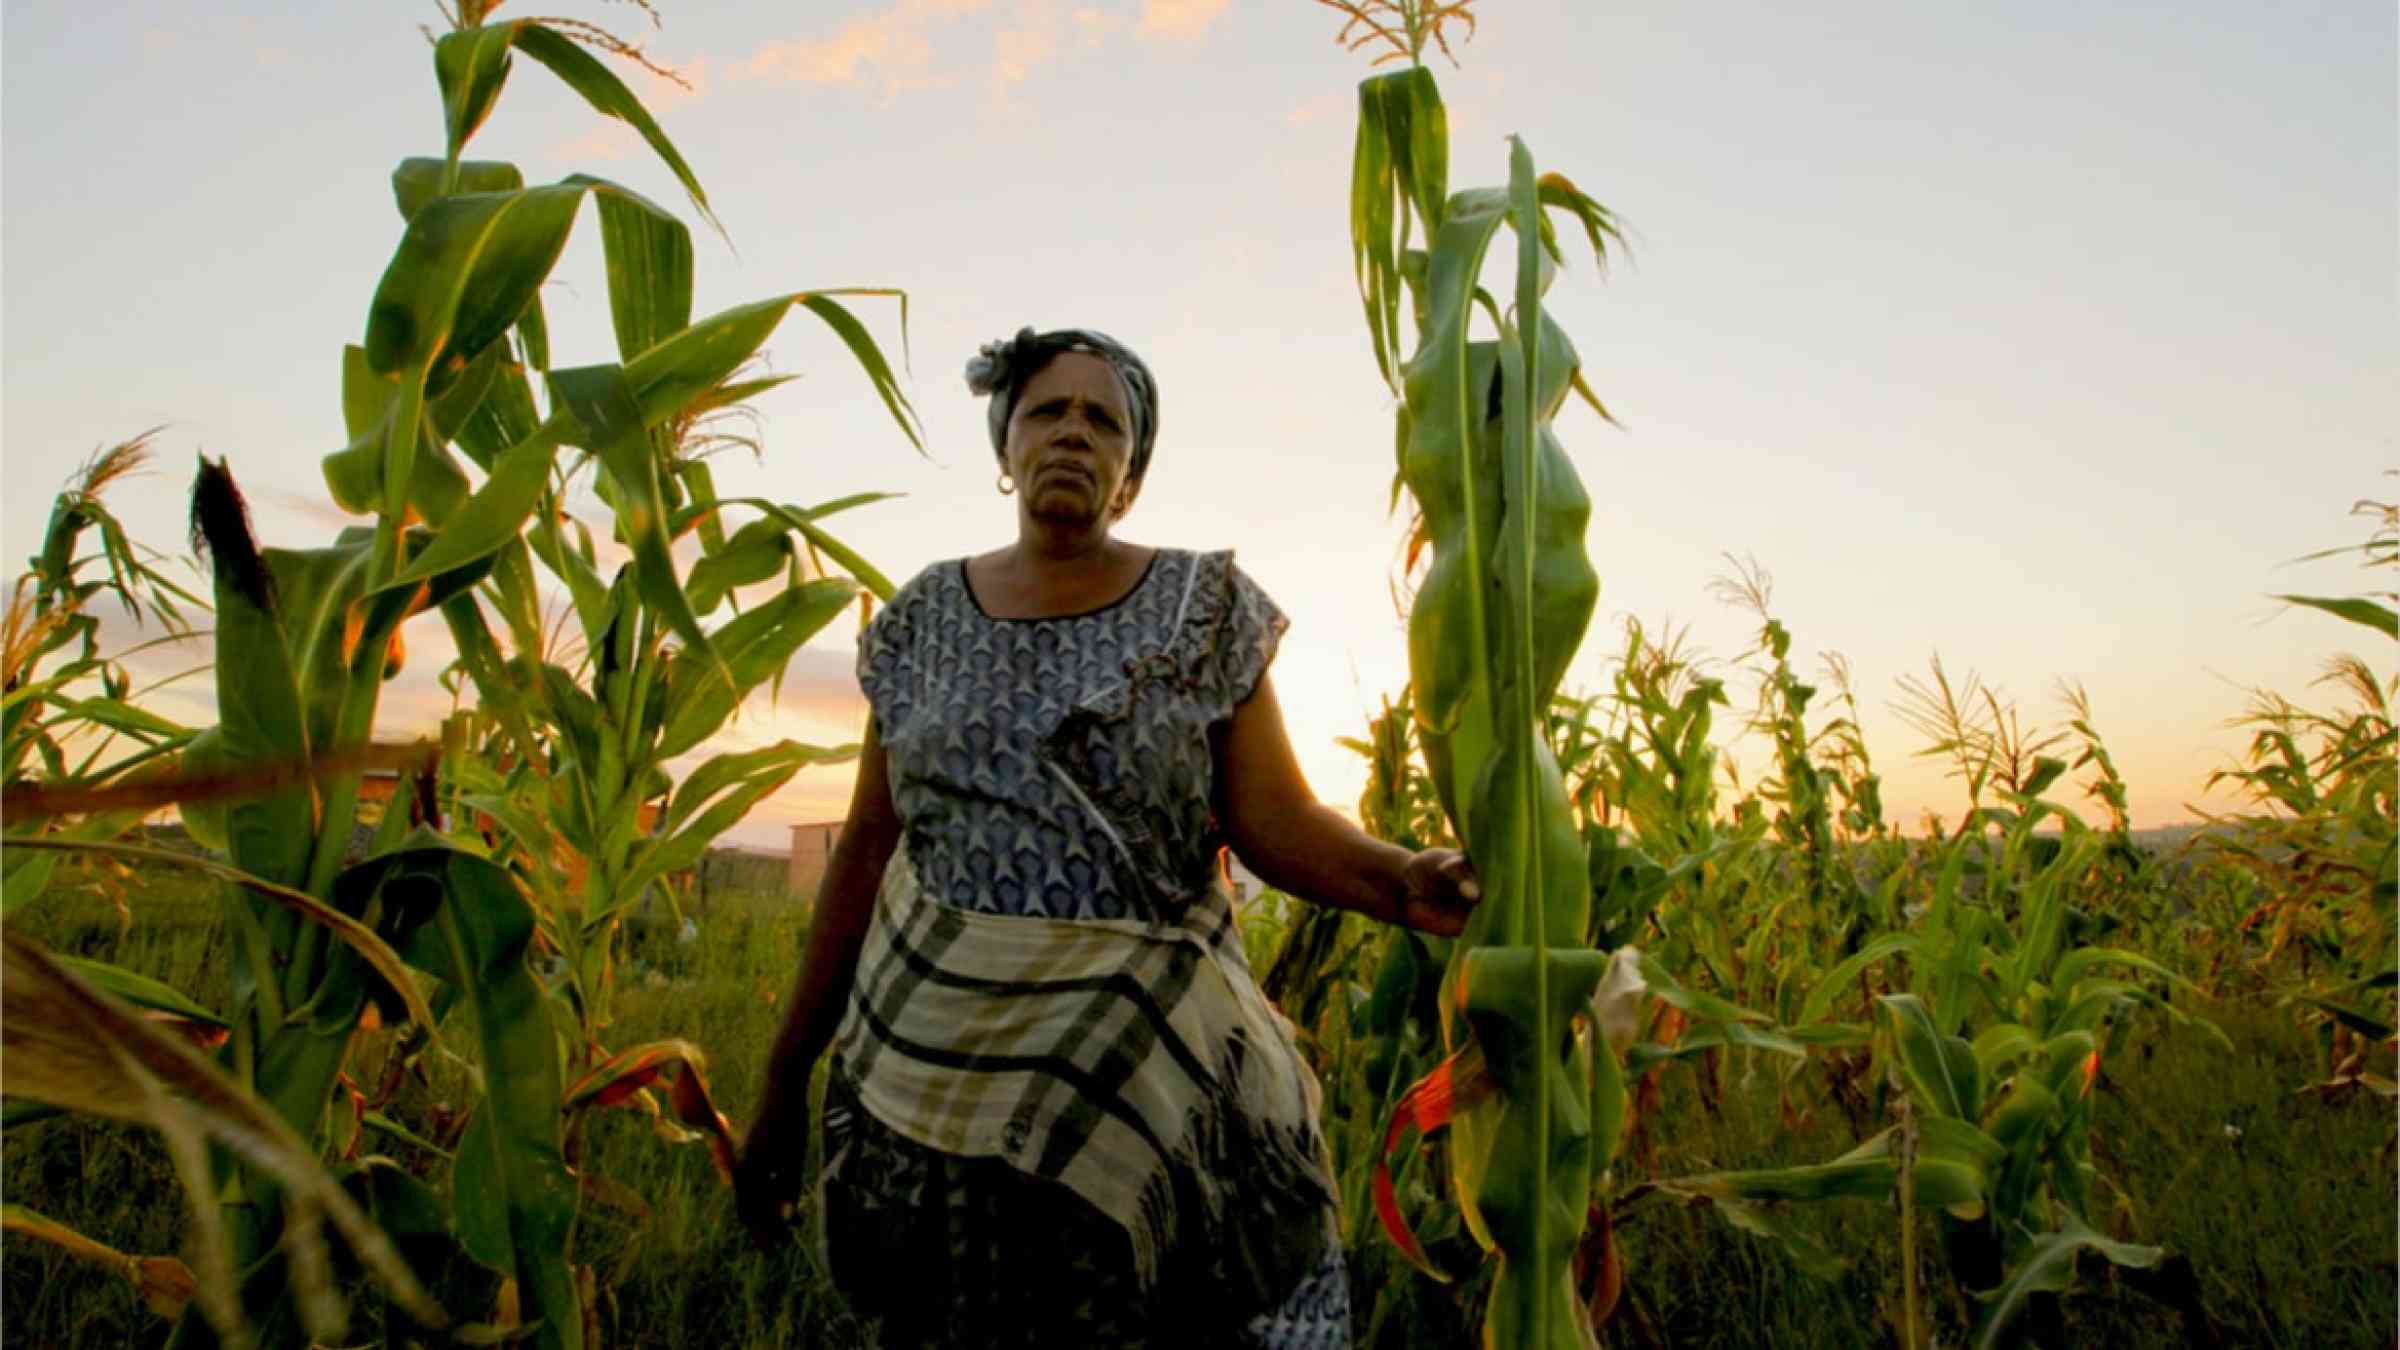 An African woman standing in a corn field.